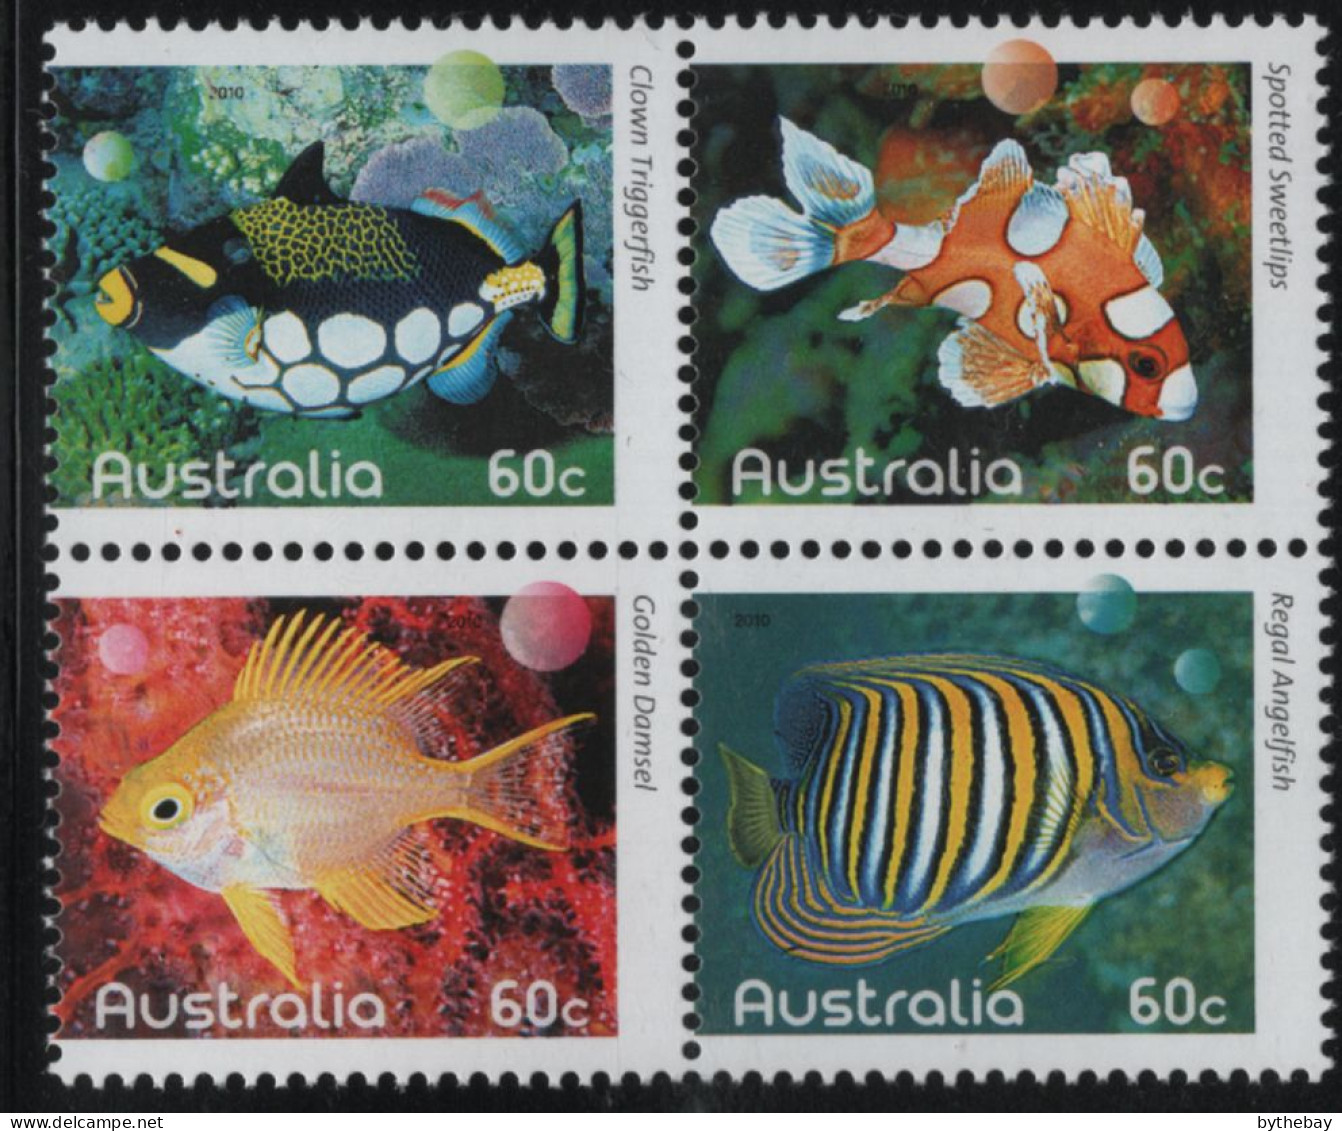 Australia 2010 MNH Sc 3274a 60c Colourful Reef Fish Block - Mint Stamps